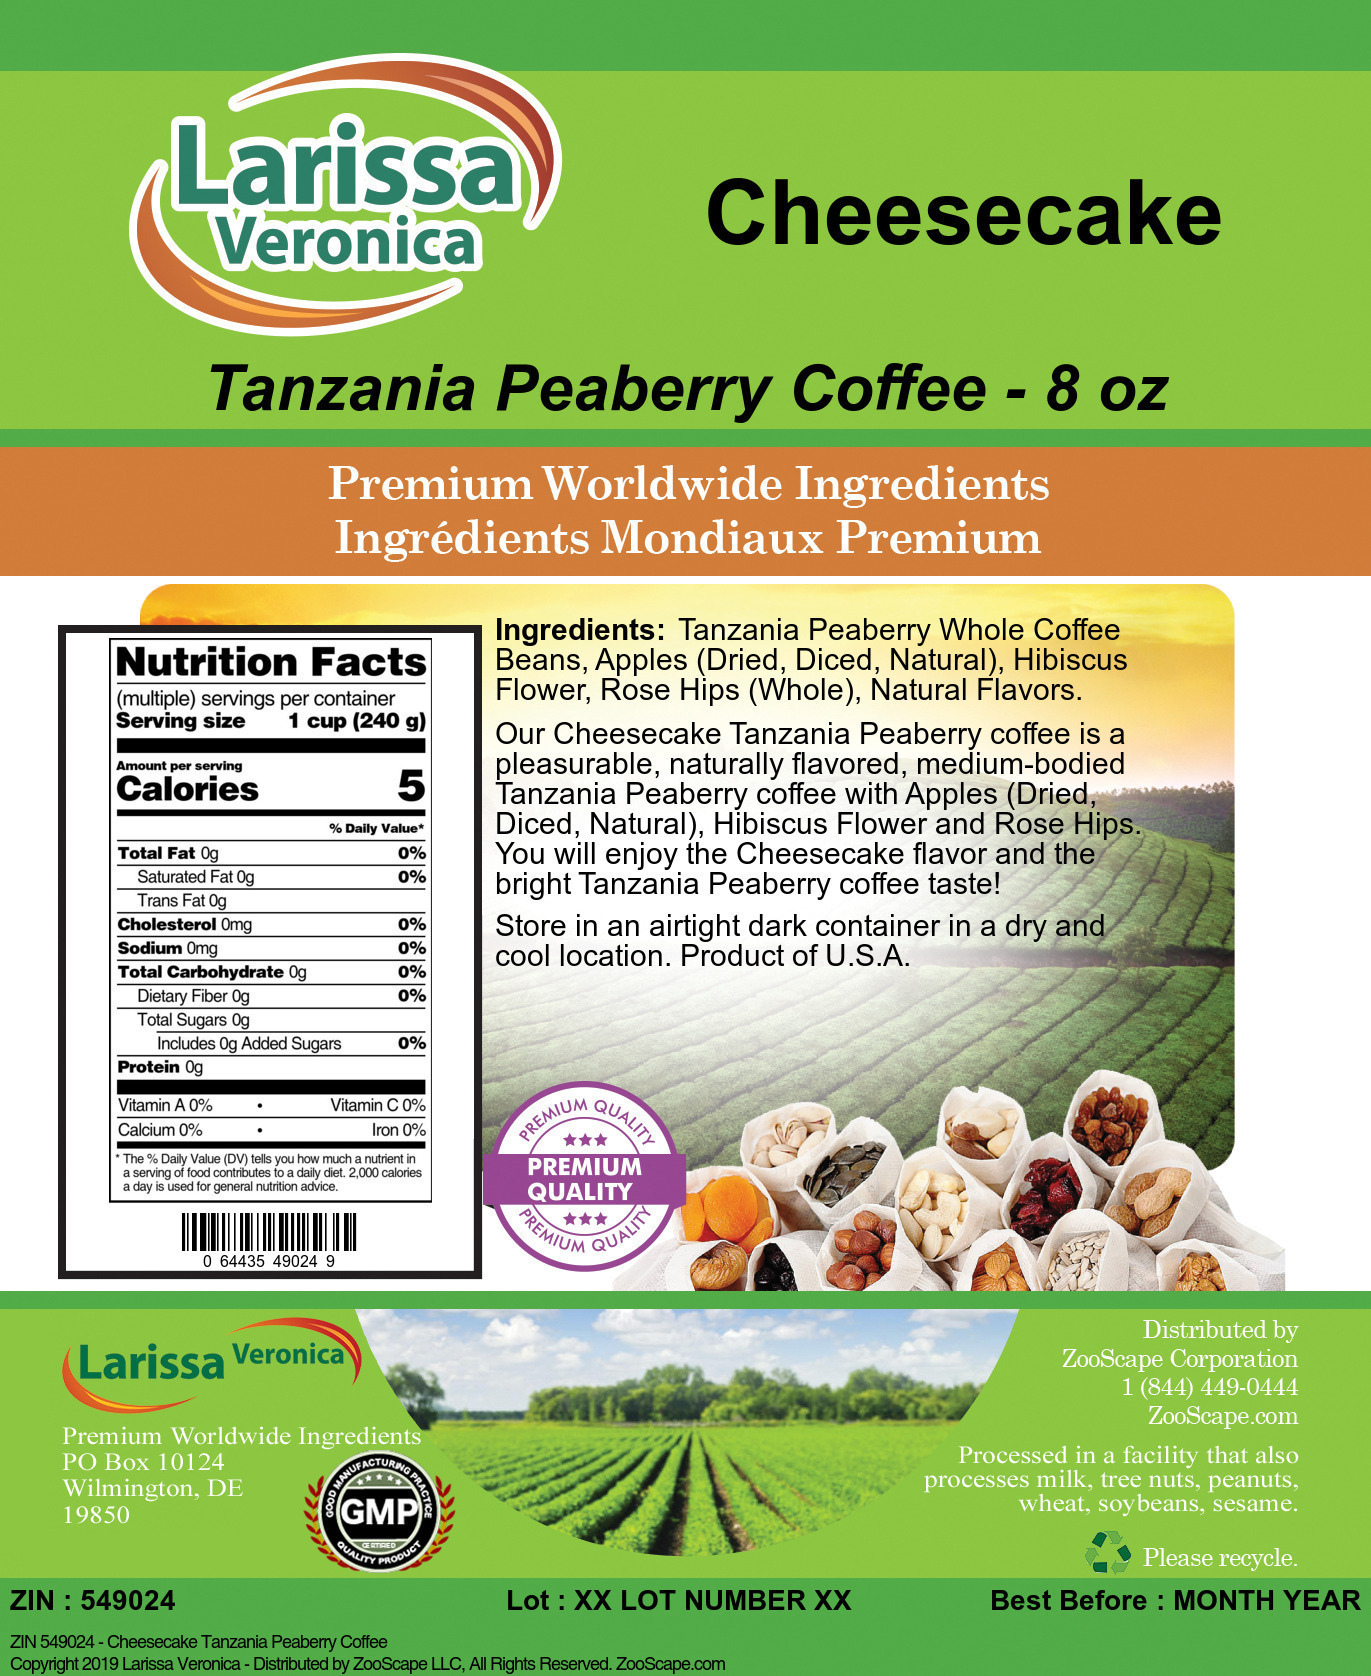 Cheesecake Tanzania Peaberry Coffee - Label